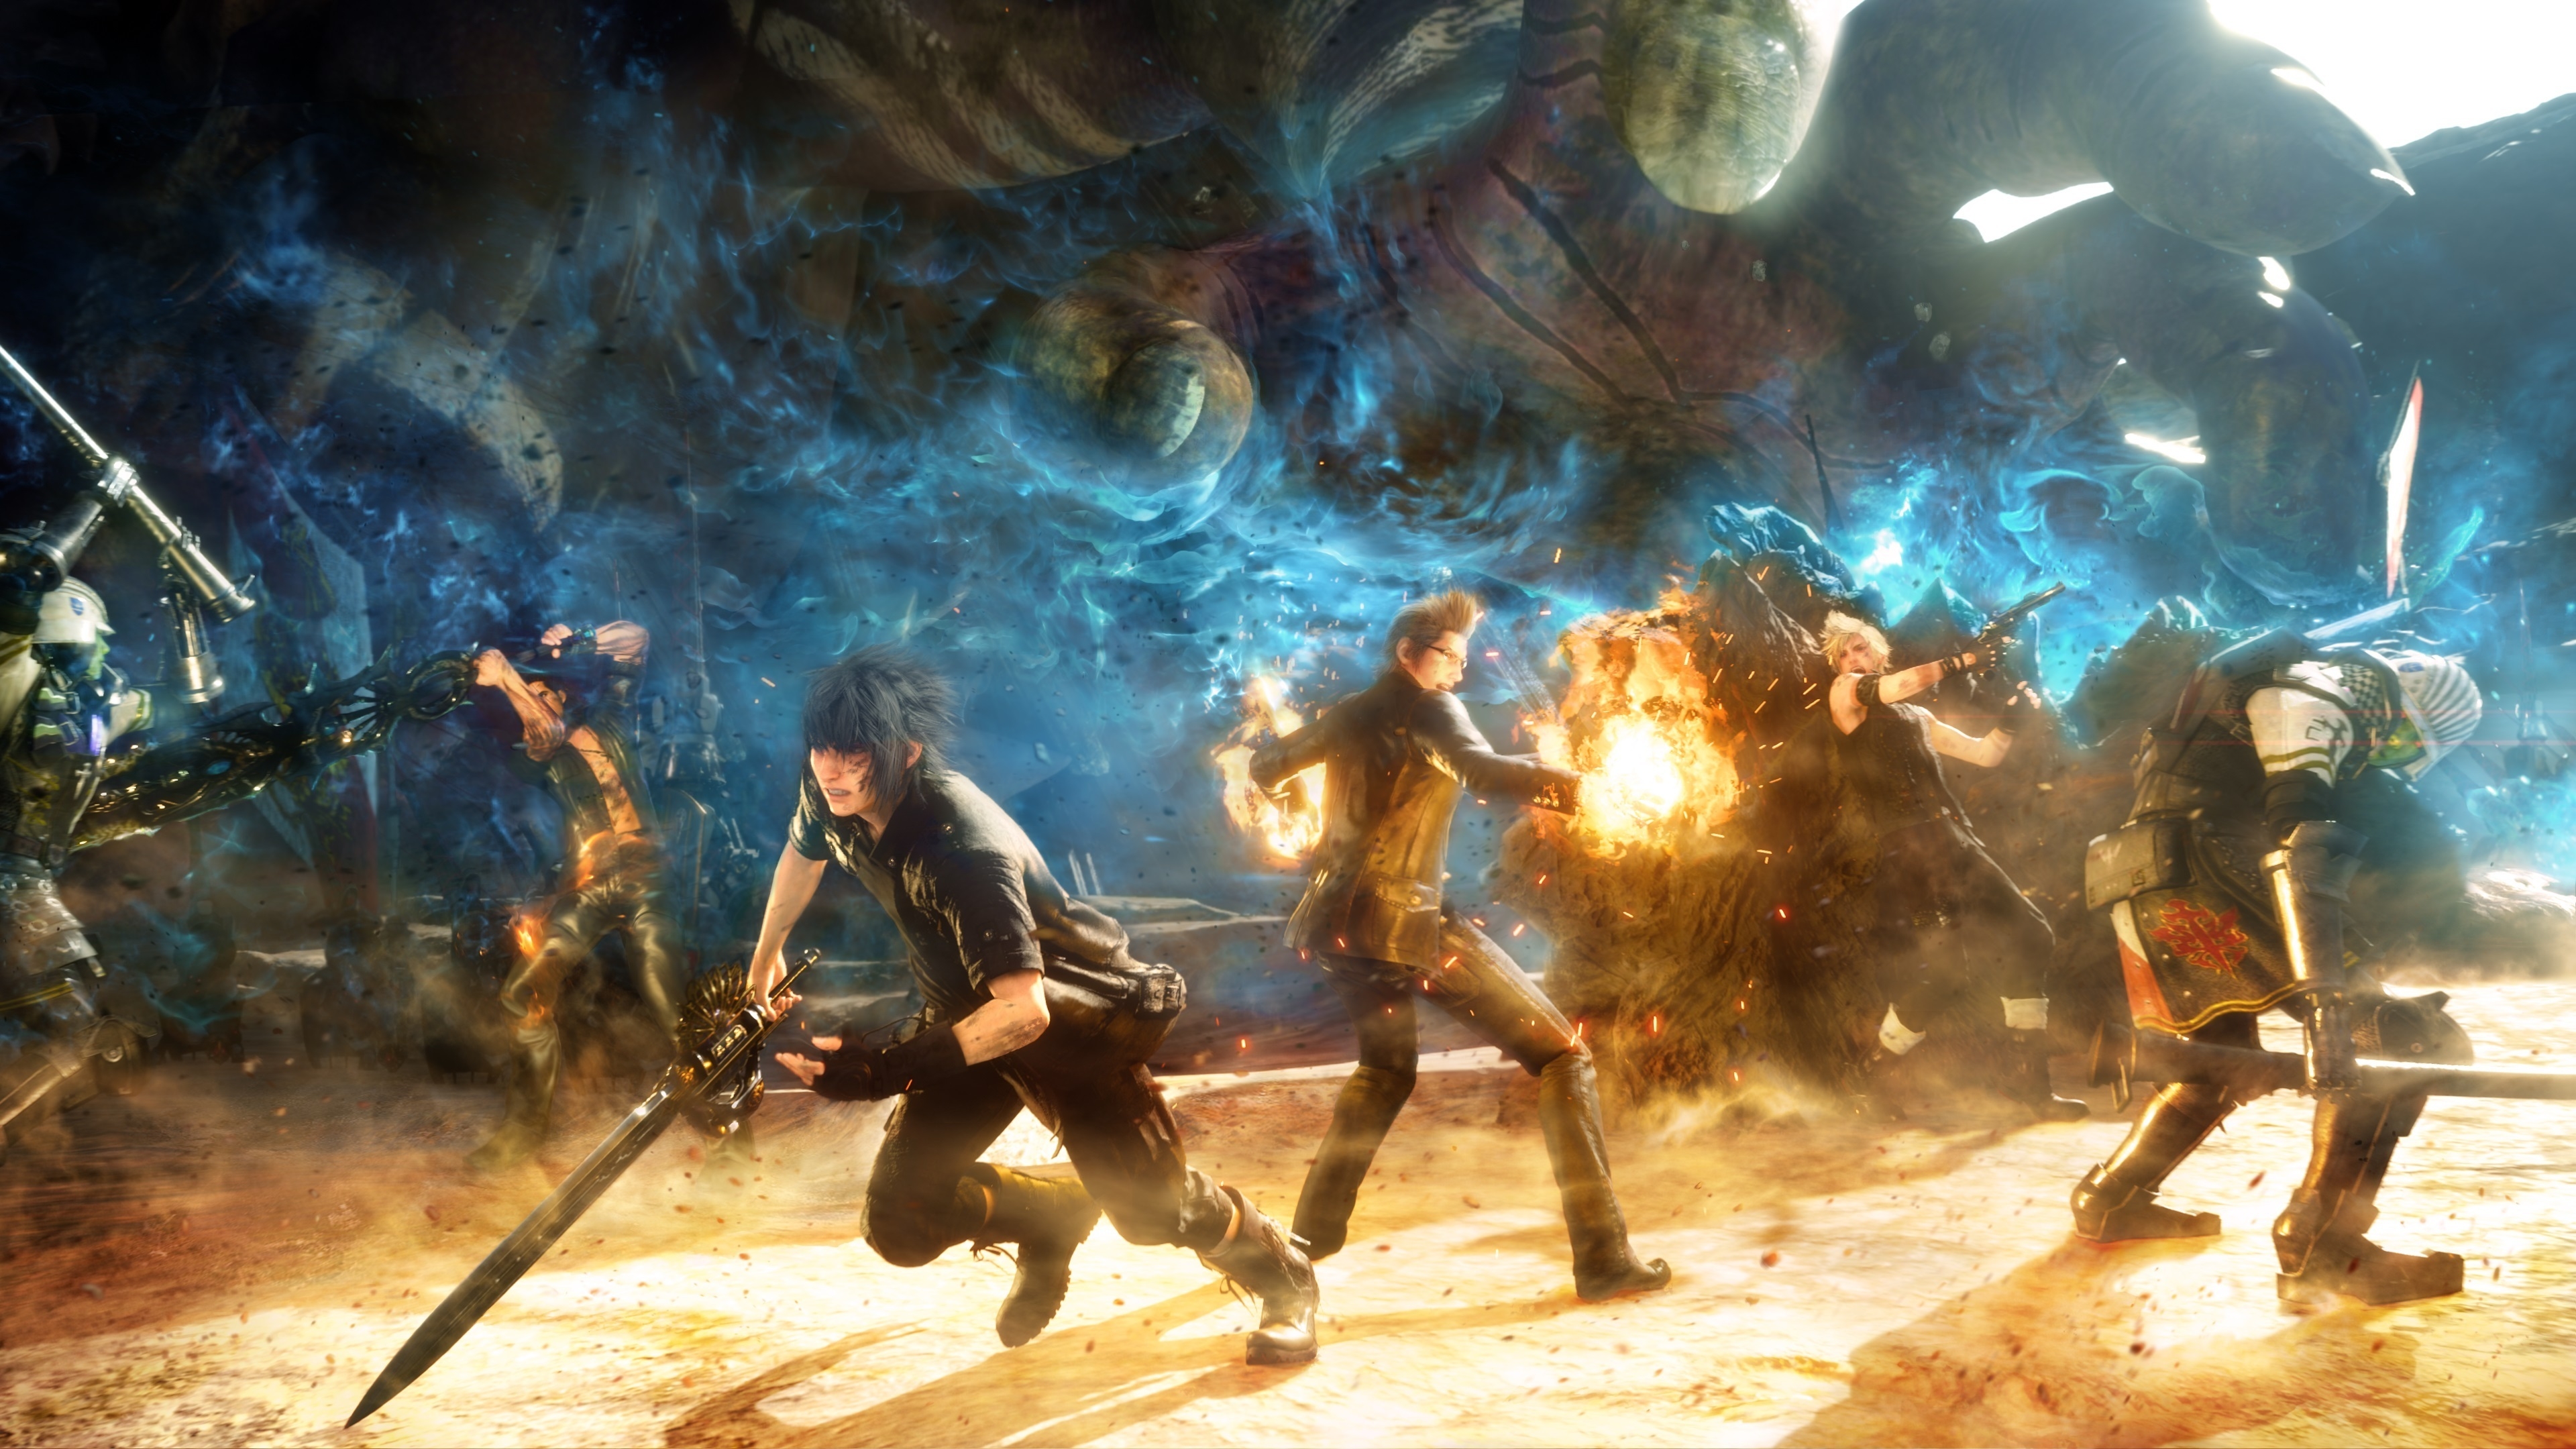 Final Fantasy V Battle for 3840 x 2160 Ultra HD resolution